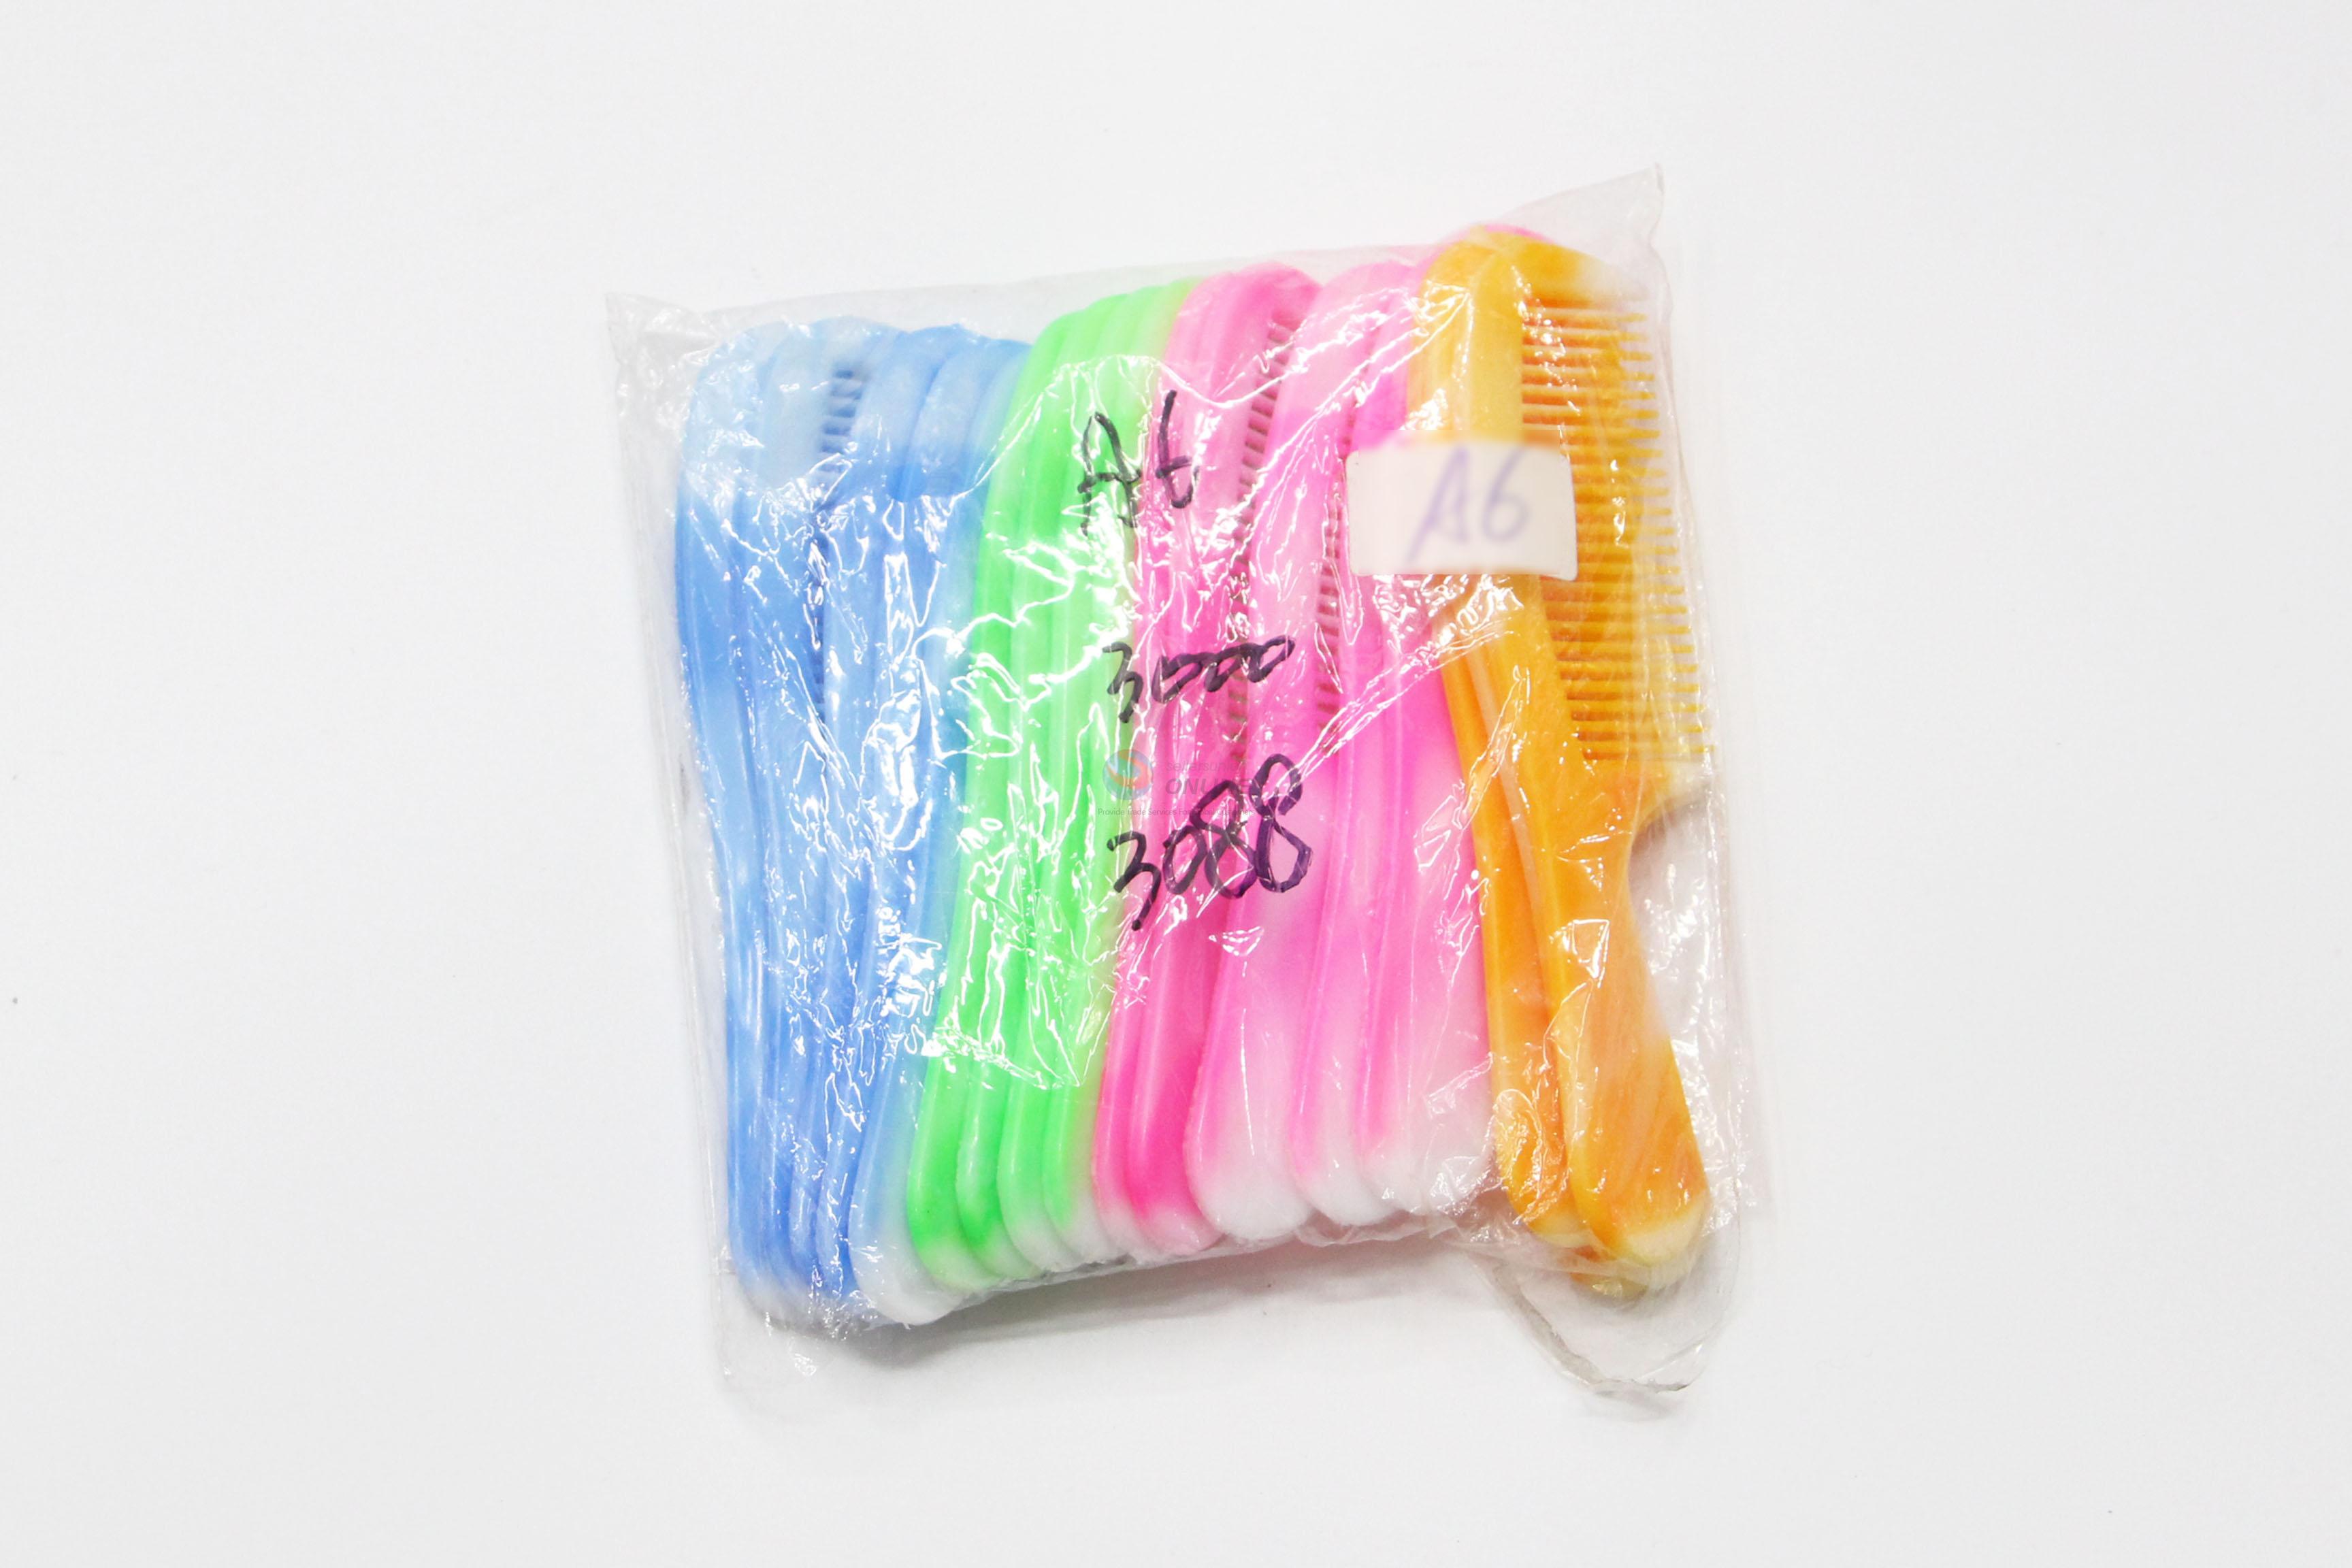 Wholesale New Colorful Plastic Comb